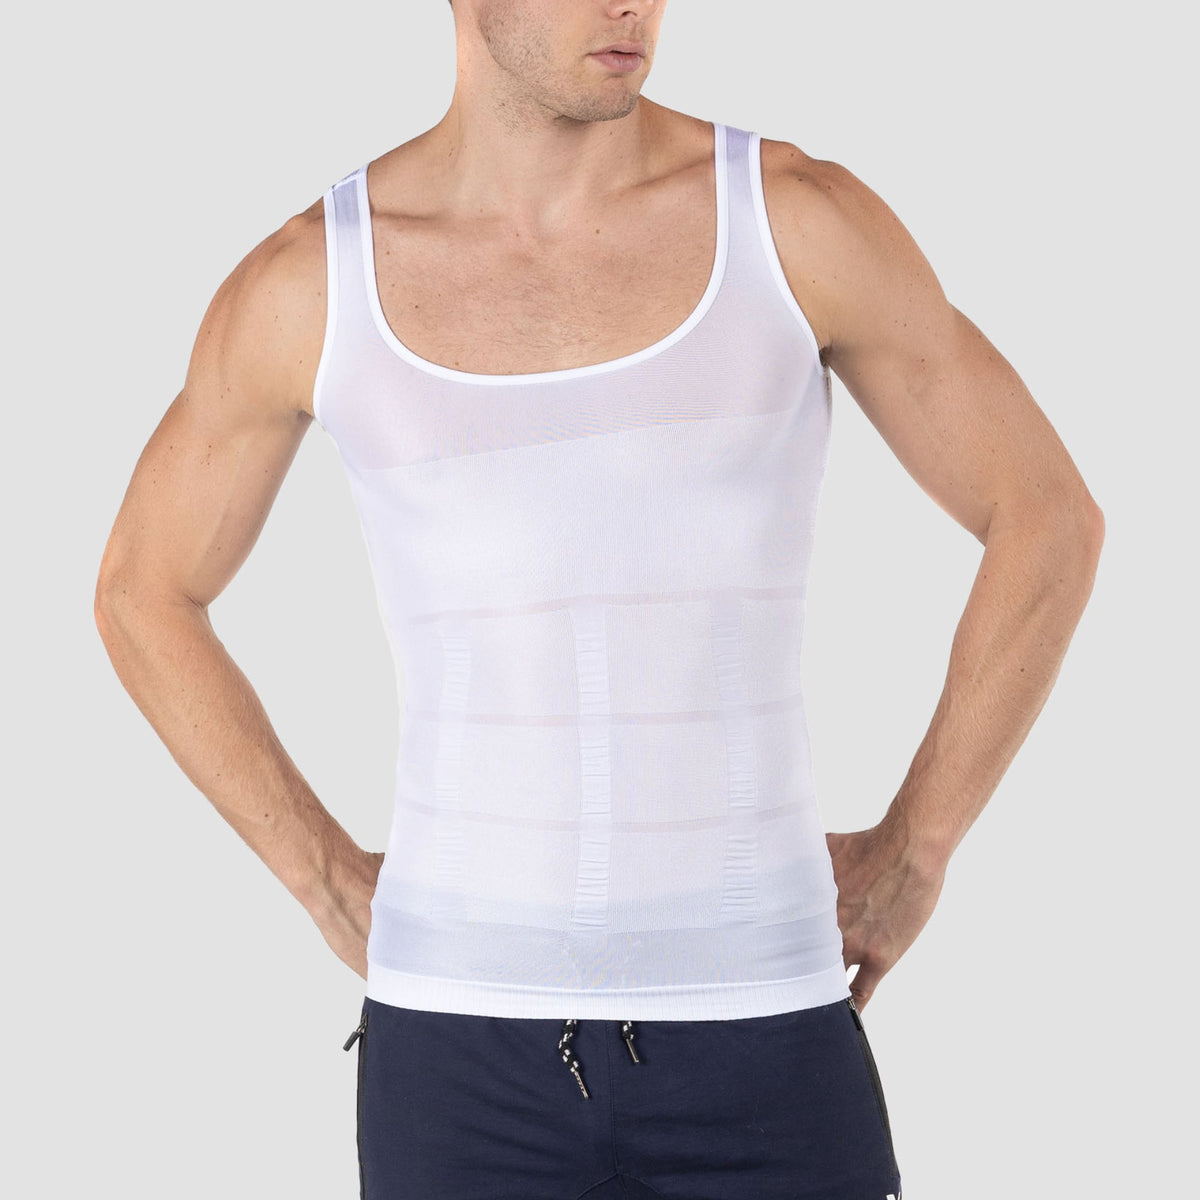  Vaslanda Men Body Shaper Slimming Vest Tummy Control